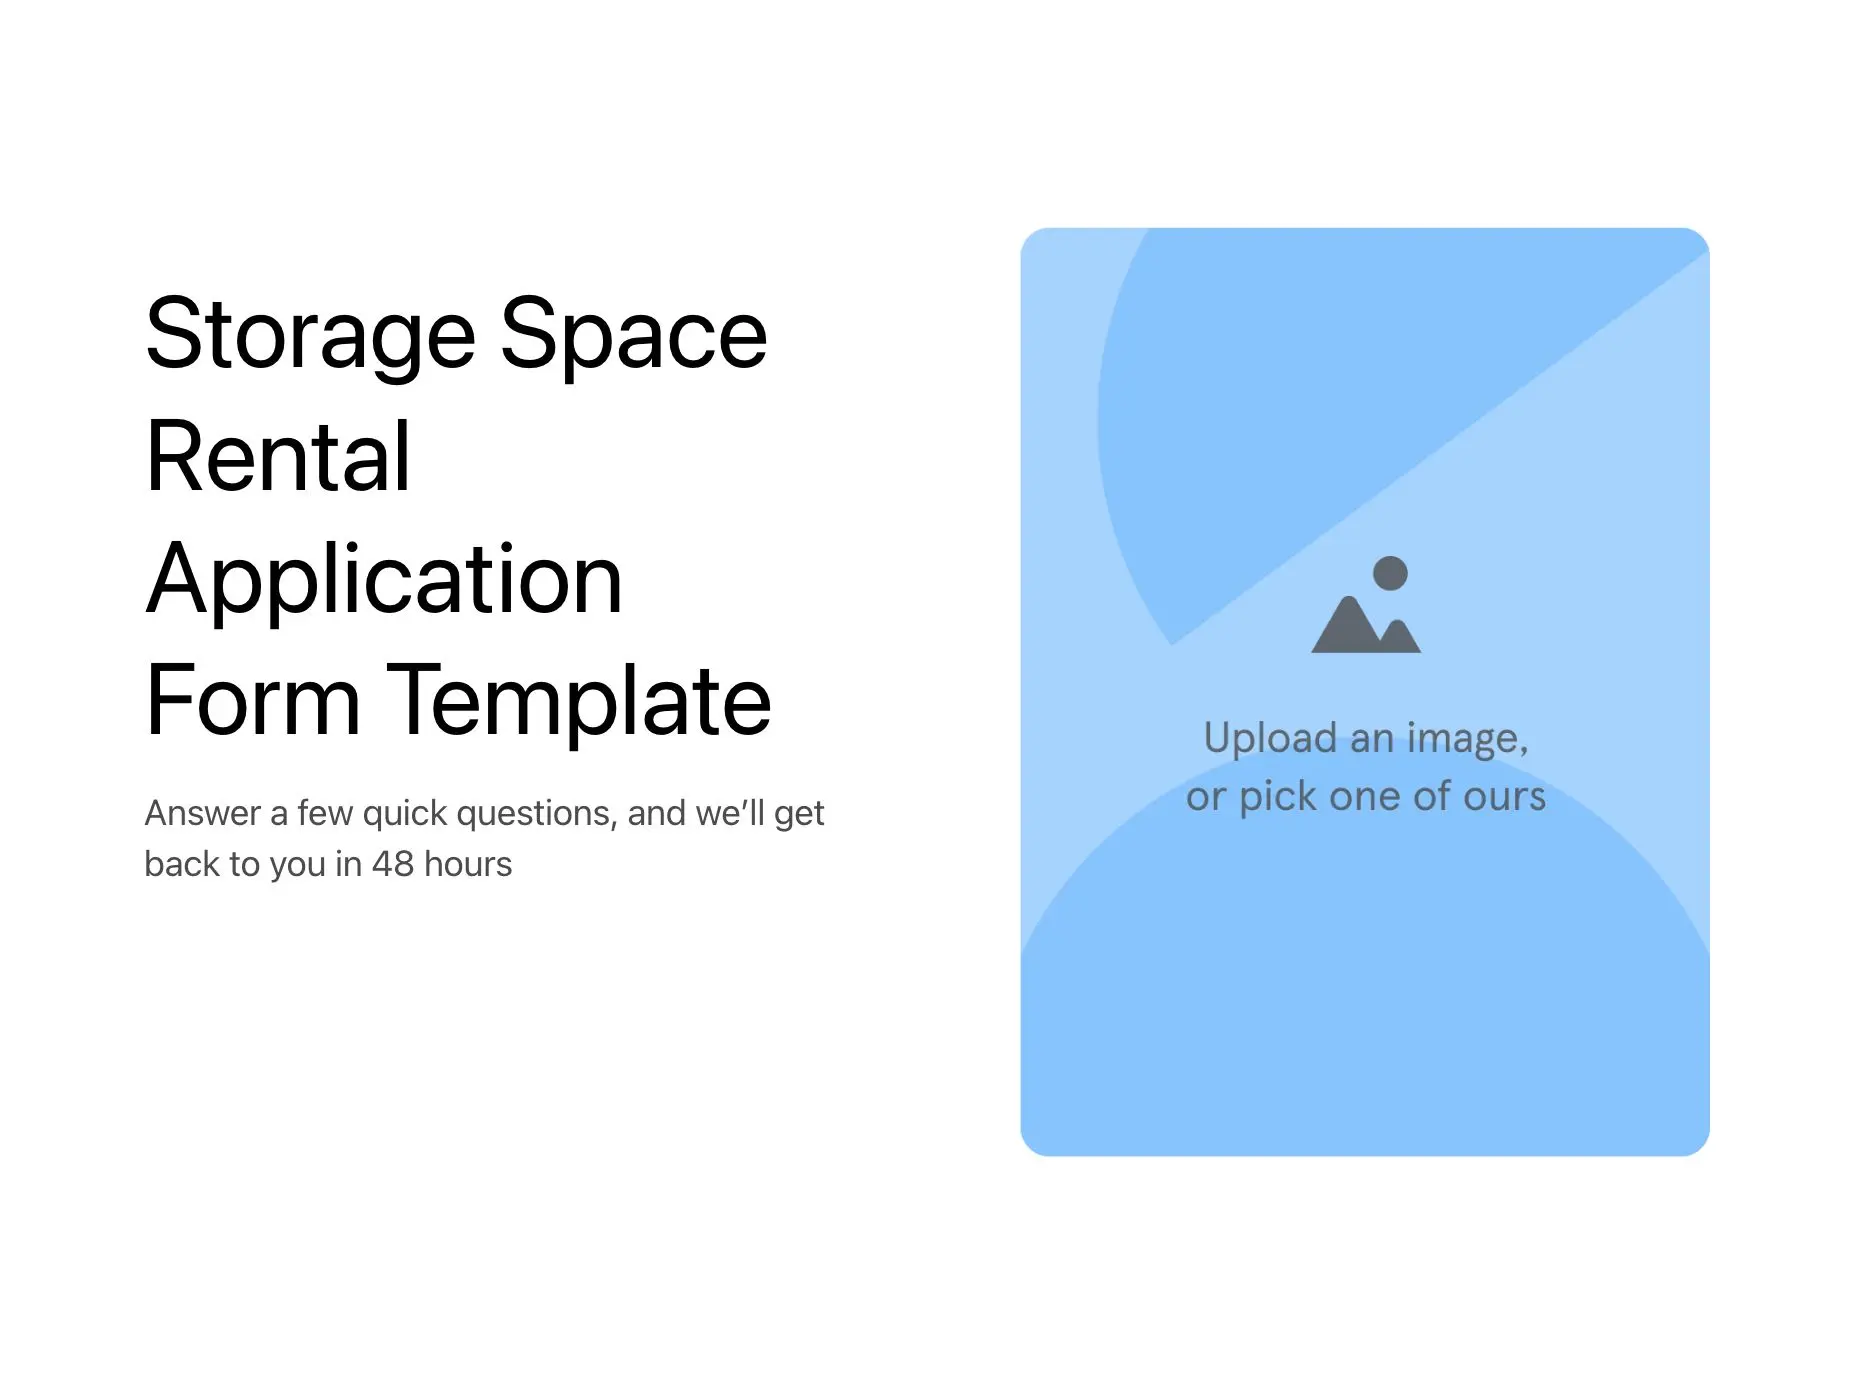 Storage Space Rental Application Form Template Hero